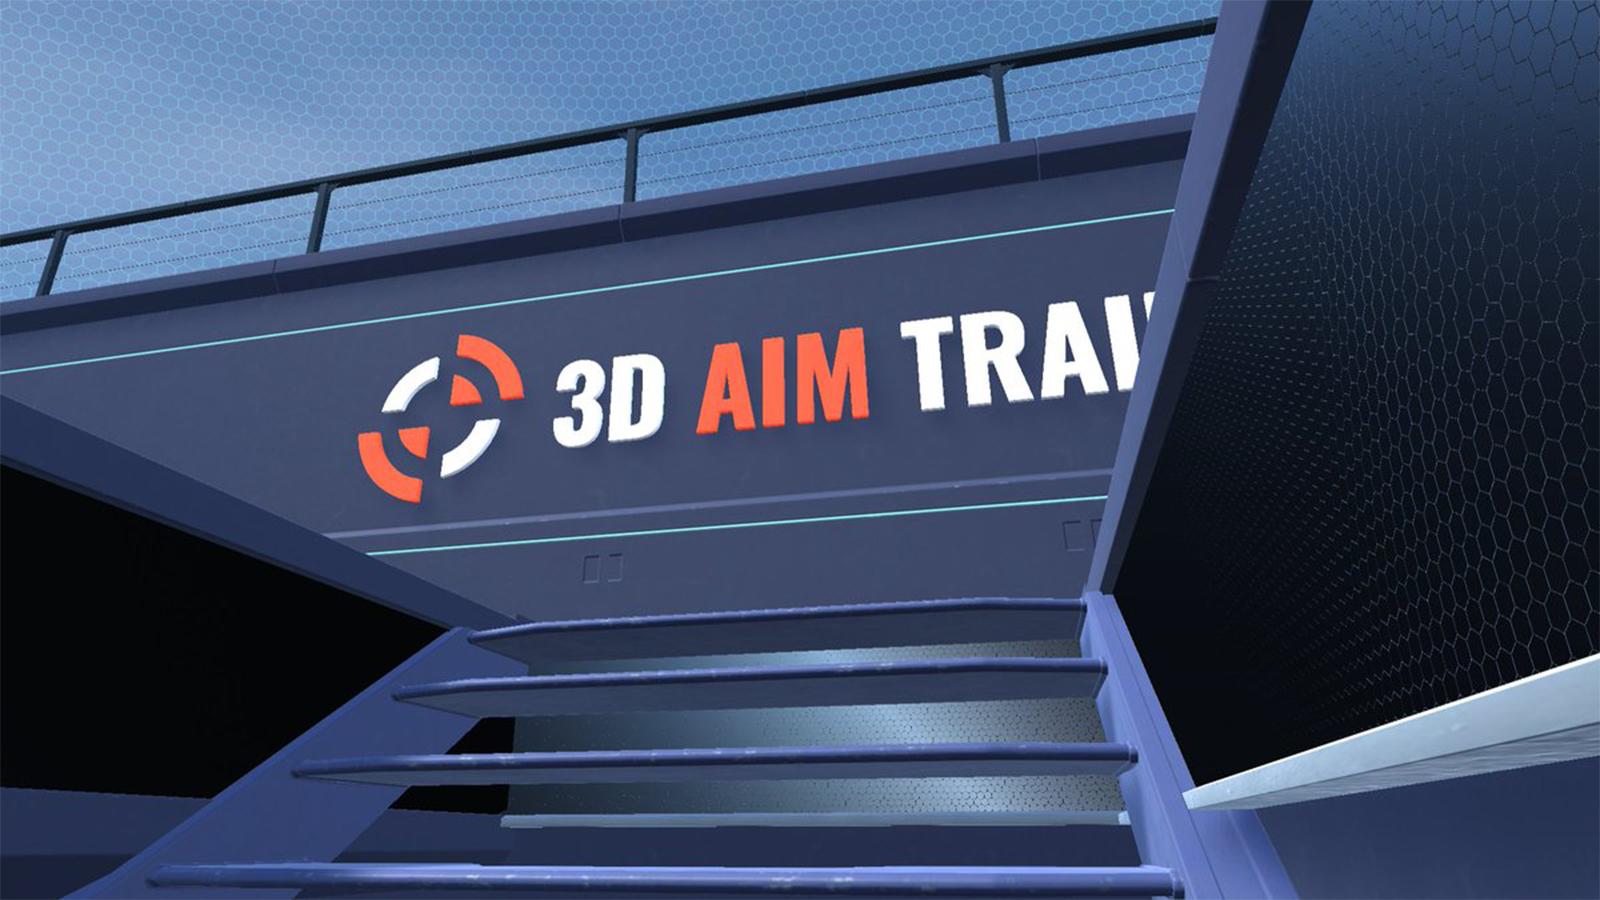 3D Aim Trainer - Play 3D Aim Trainer On Wordle Website